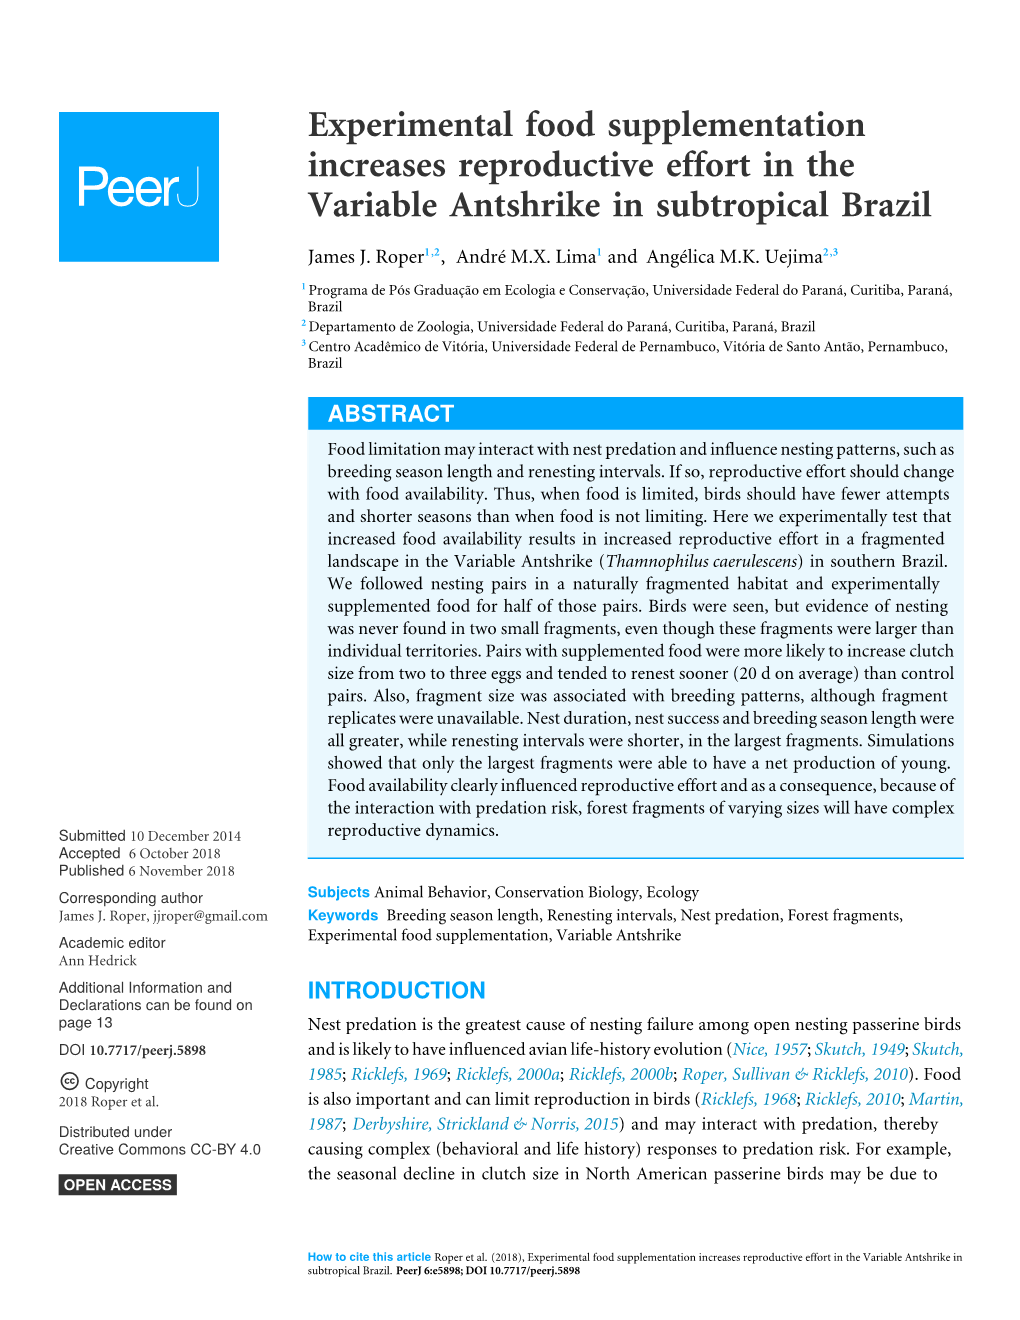 Experimental Food Supplementation Increases Reproductive Effort in the Variable Antshrike in Subtropical Brazil